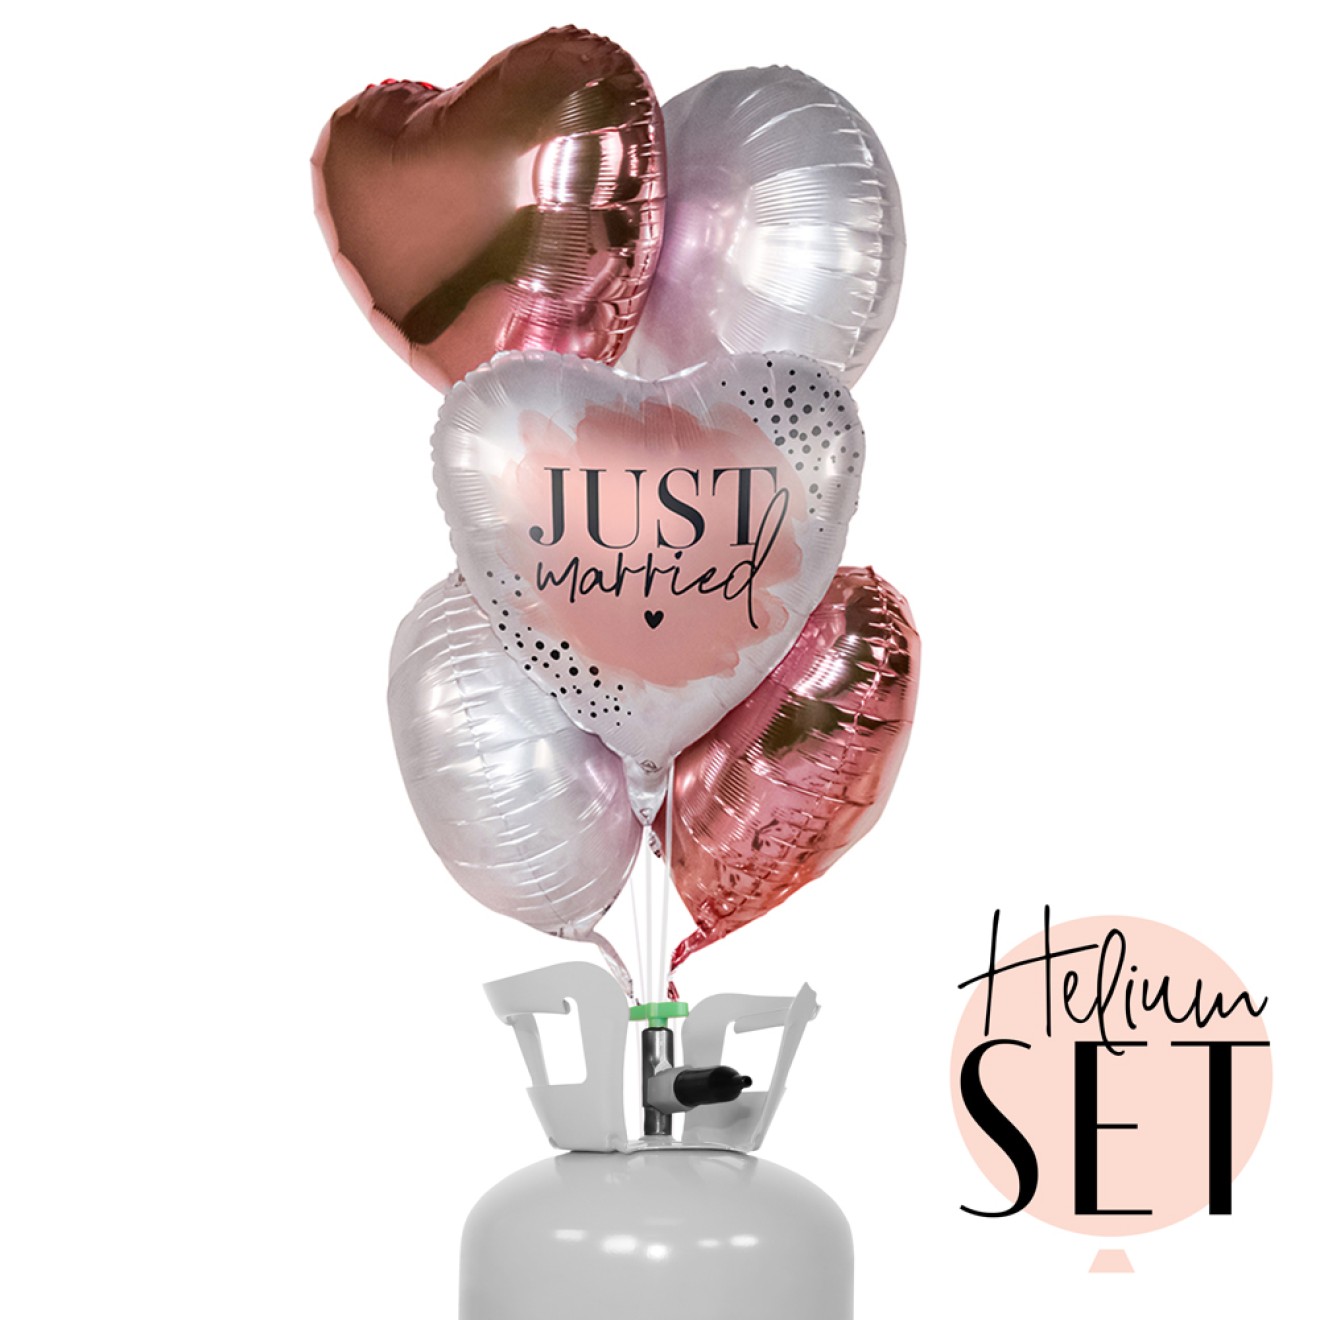 Helium Set - Simply Married